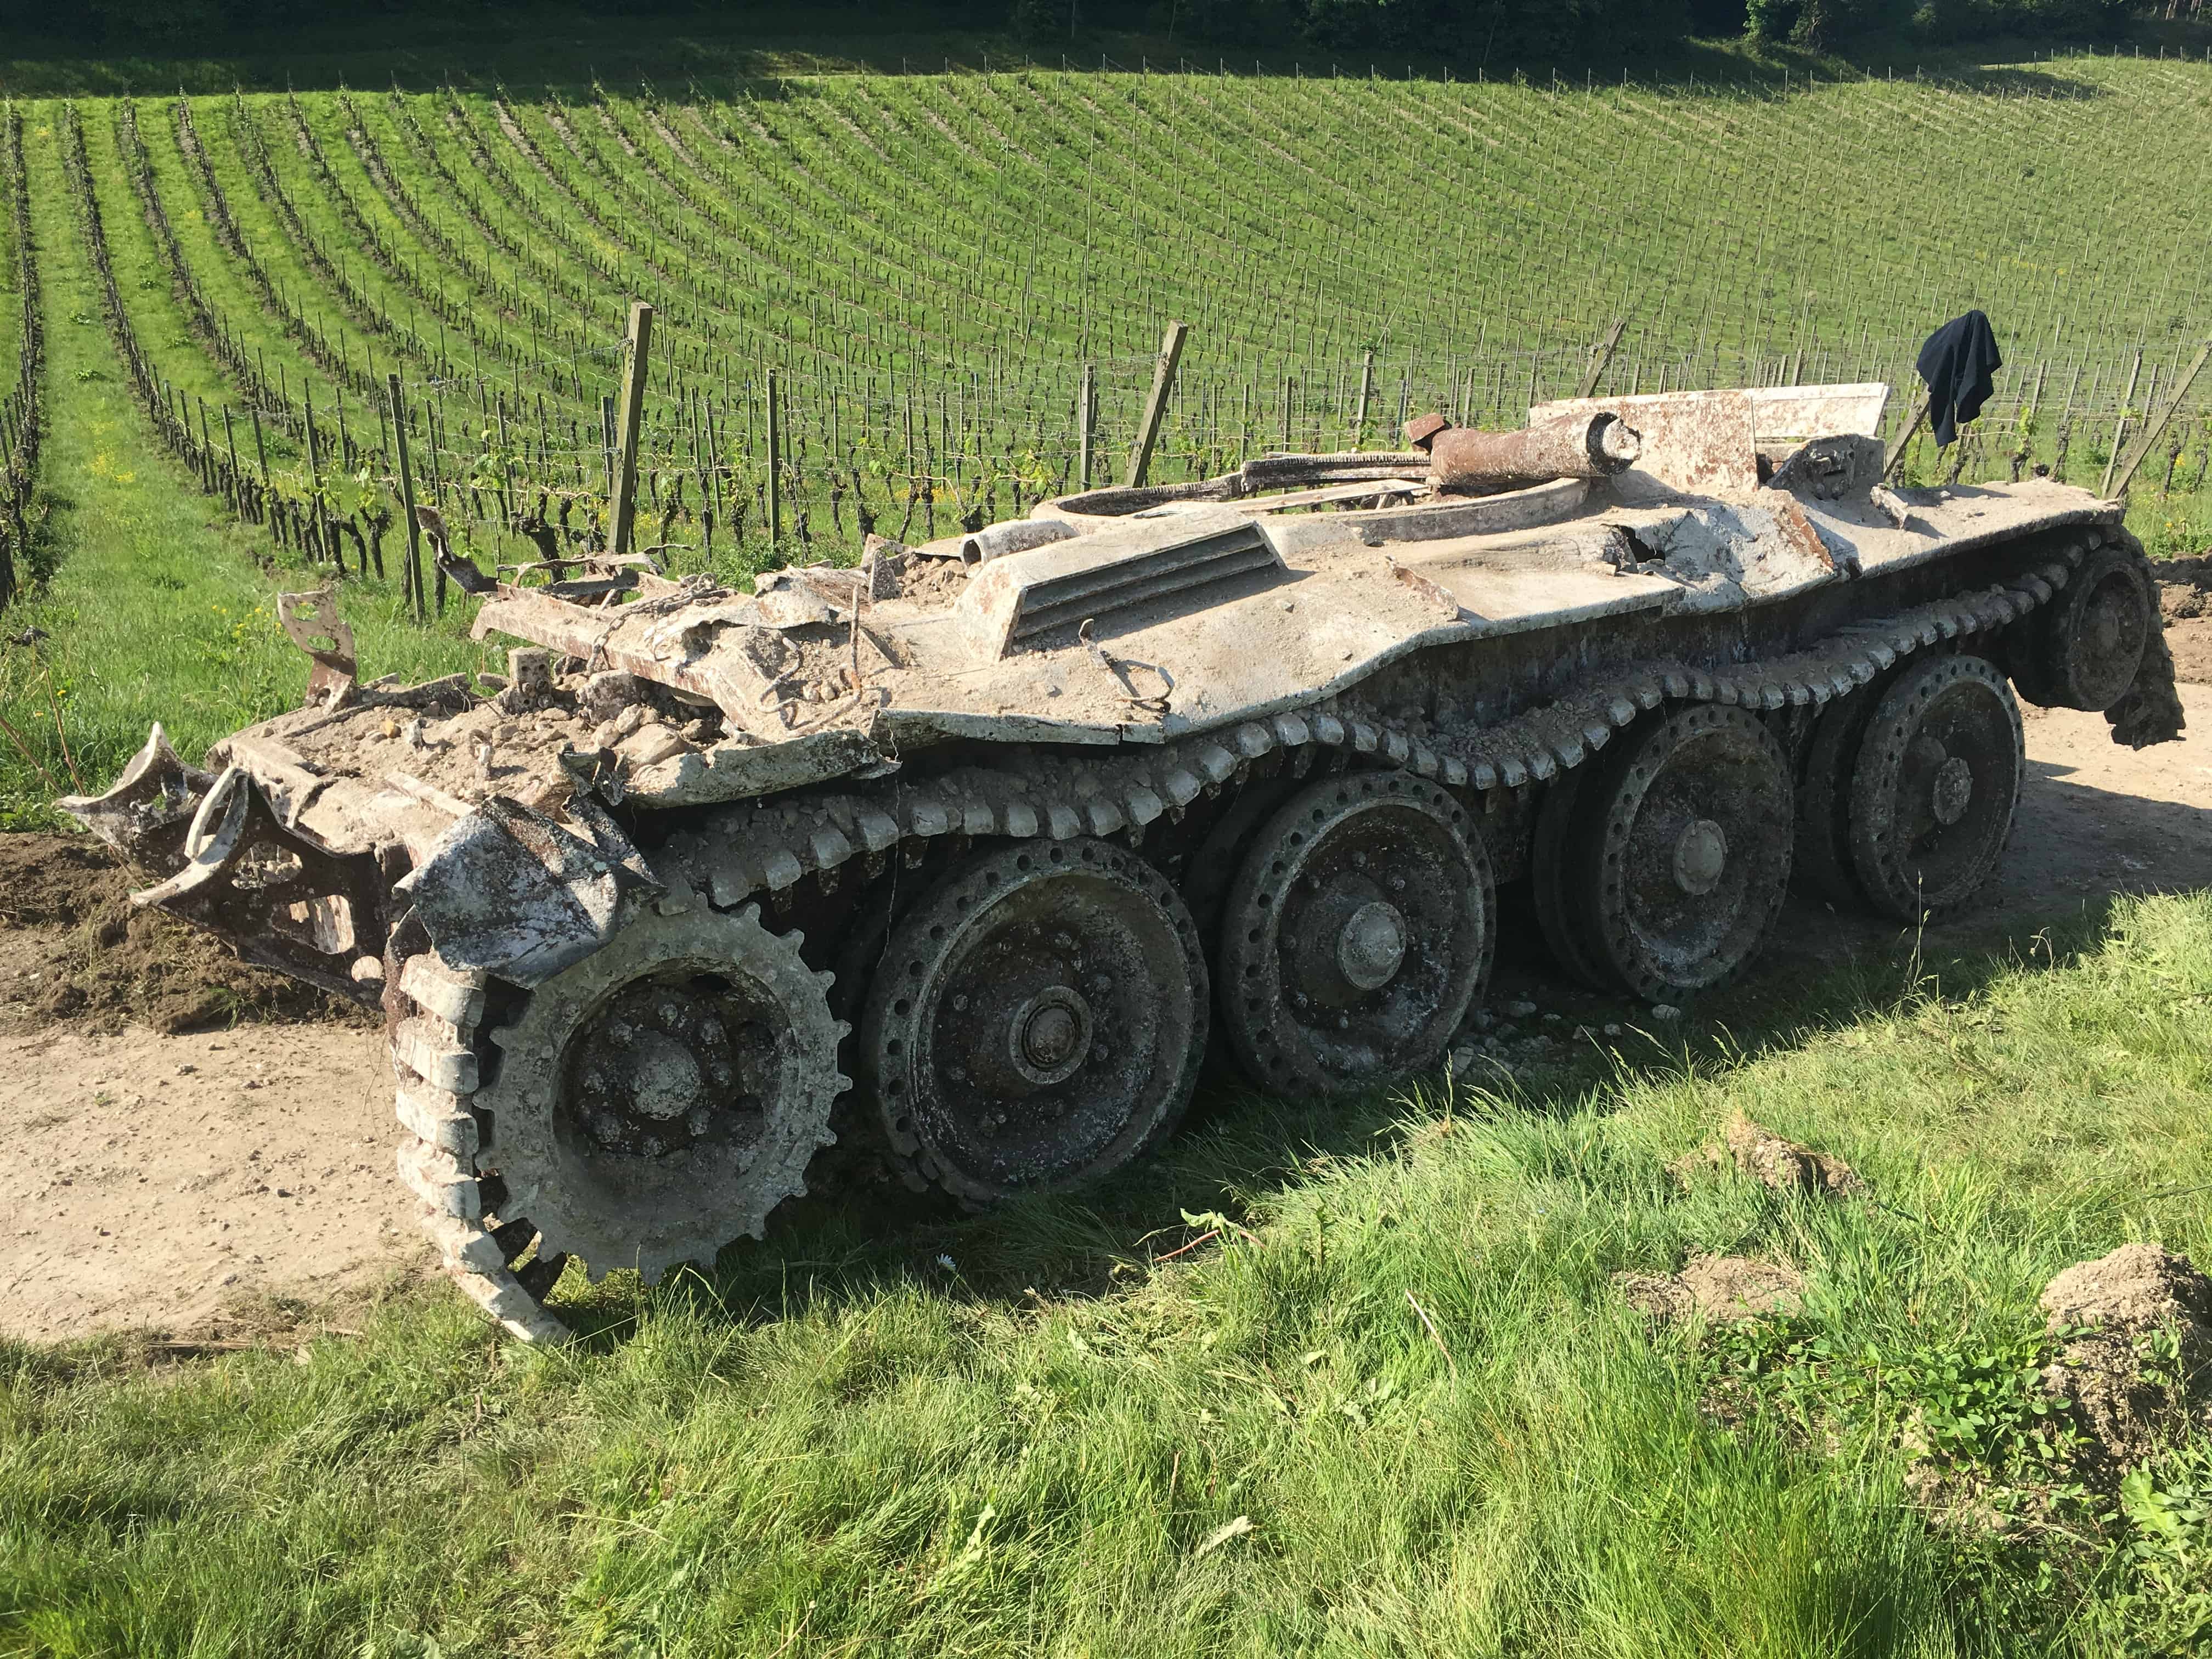 Extremely rare Second World War tank has been dug up at Denbies ...